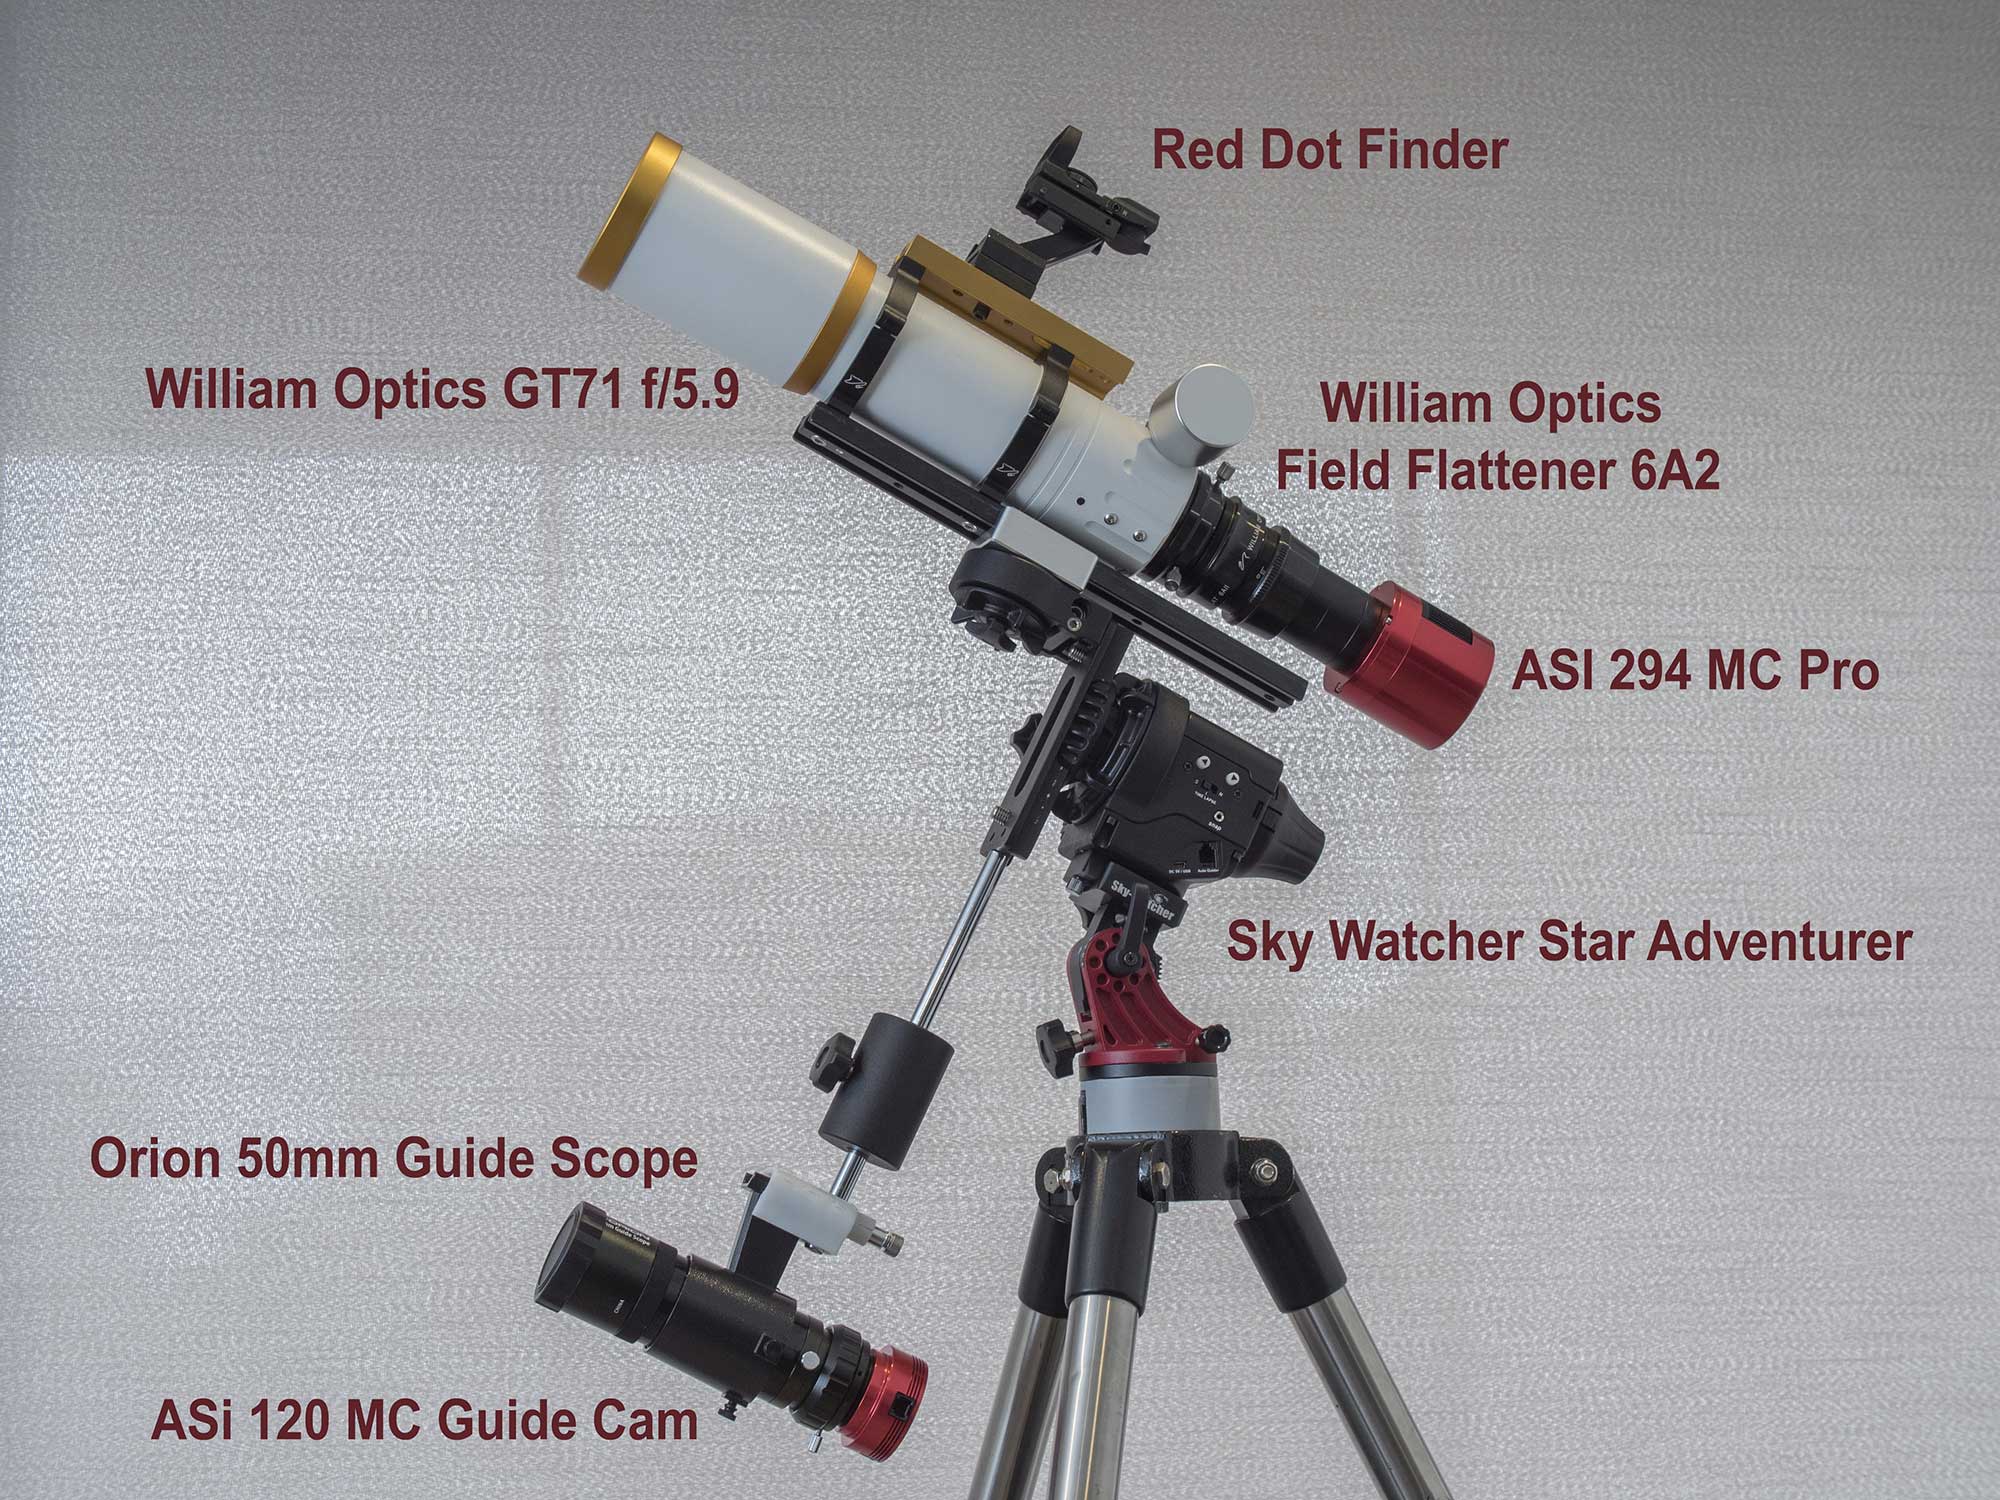 William Optics GT71 with 6A2 field flattener